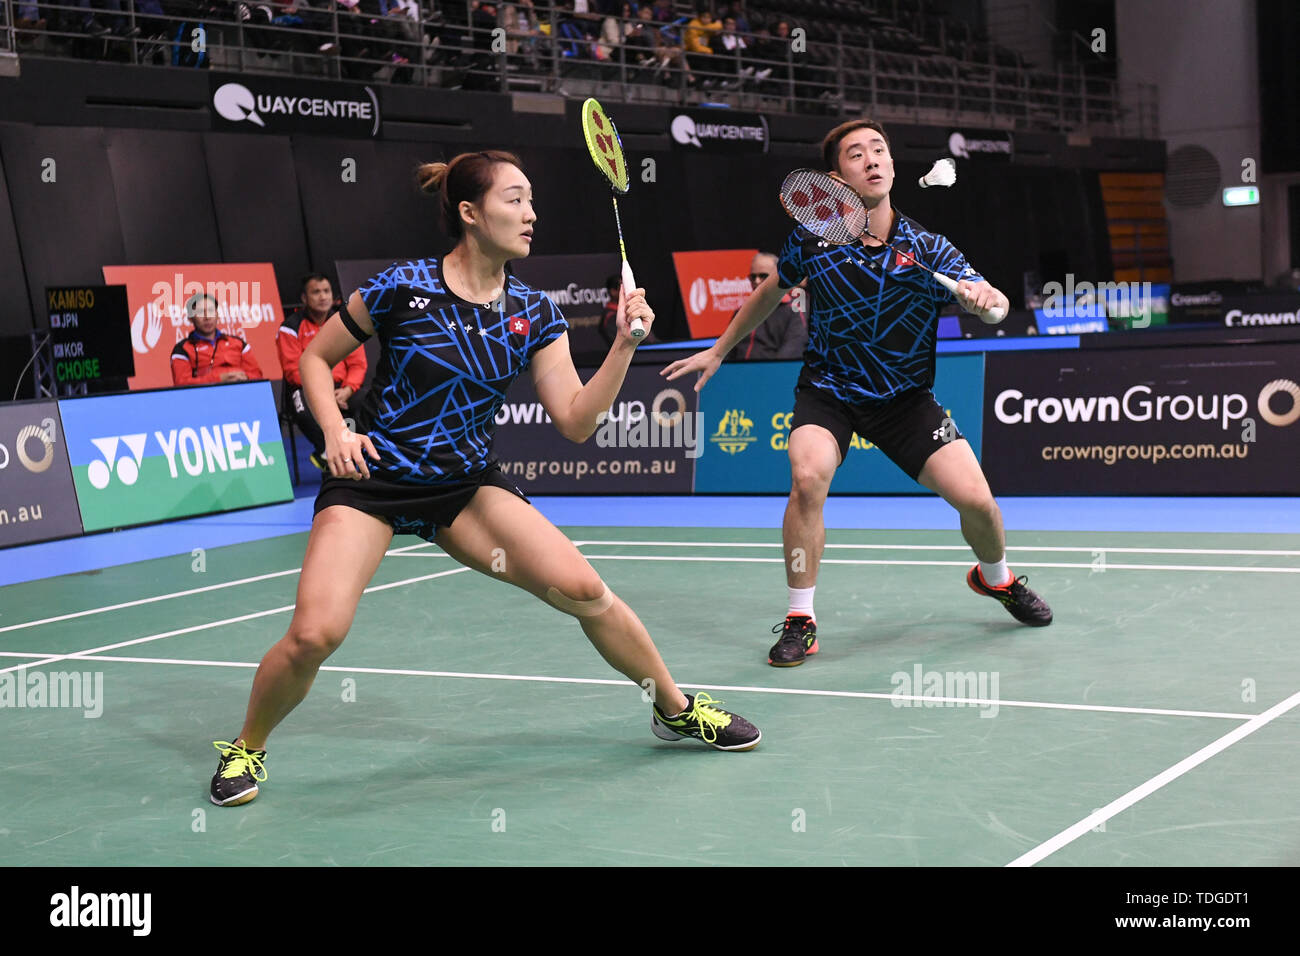 Tang Chun Man and Tse Ying Suet (Hong Kong) seen in action during the 2019 Australian Badminton Open Doubles Semi-finals match against Wang Yilyu and Huang Dongping (China). Tang and Tse